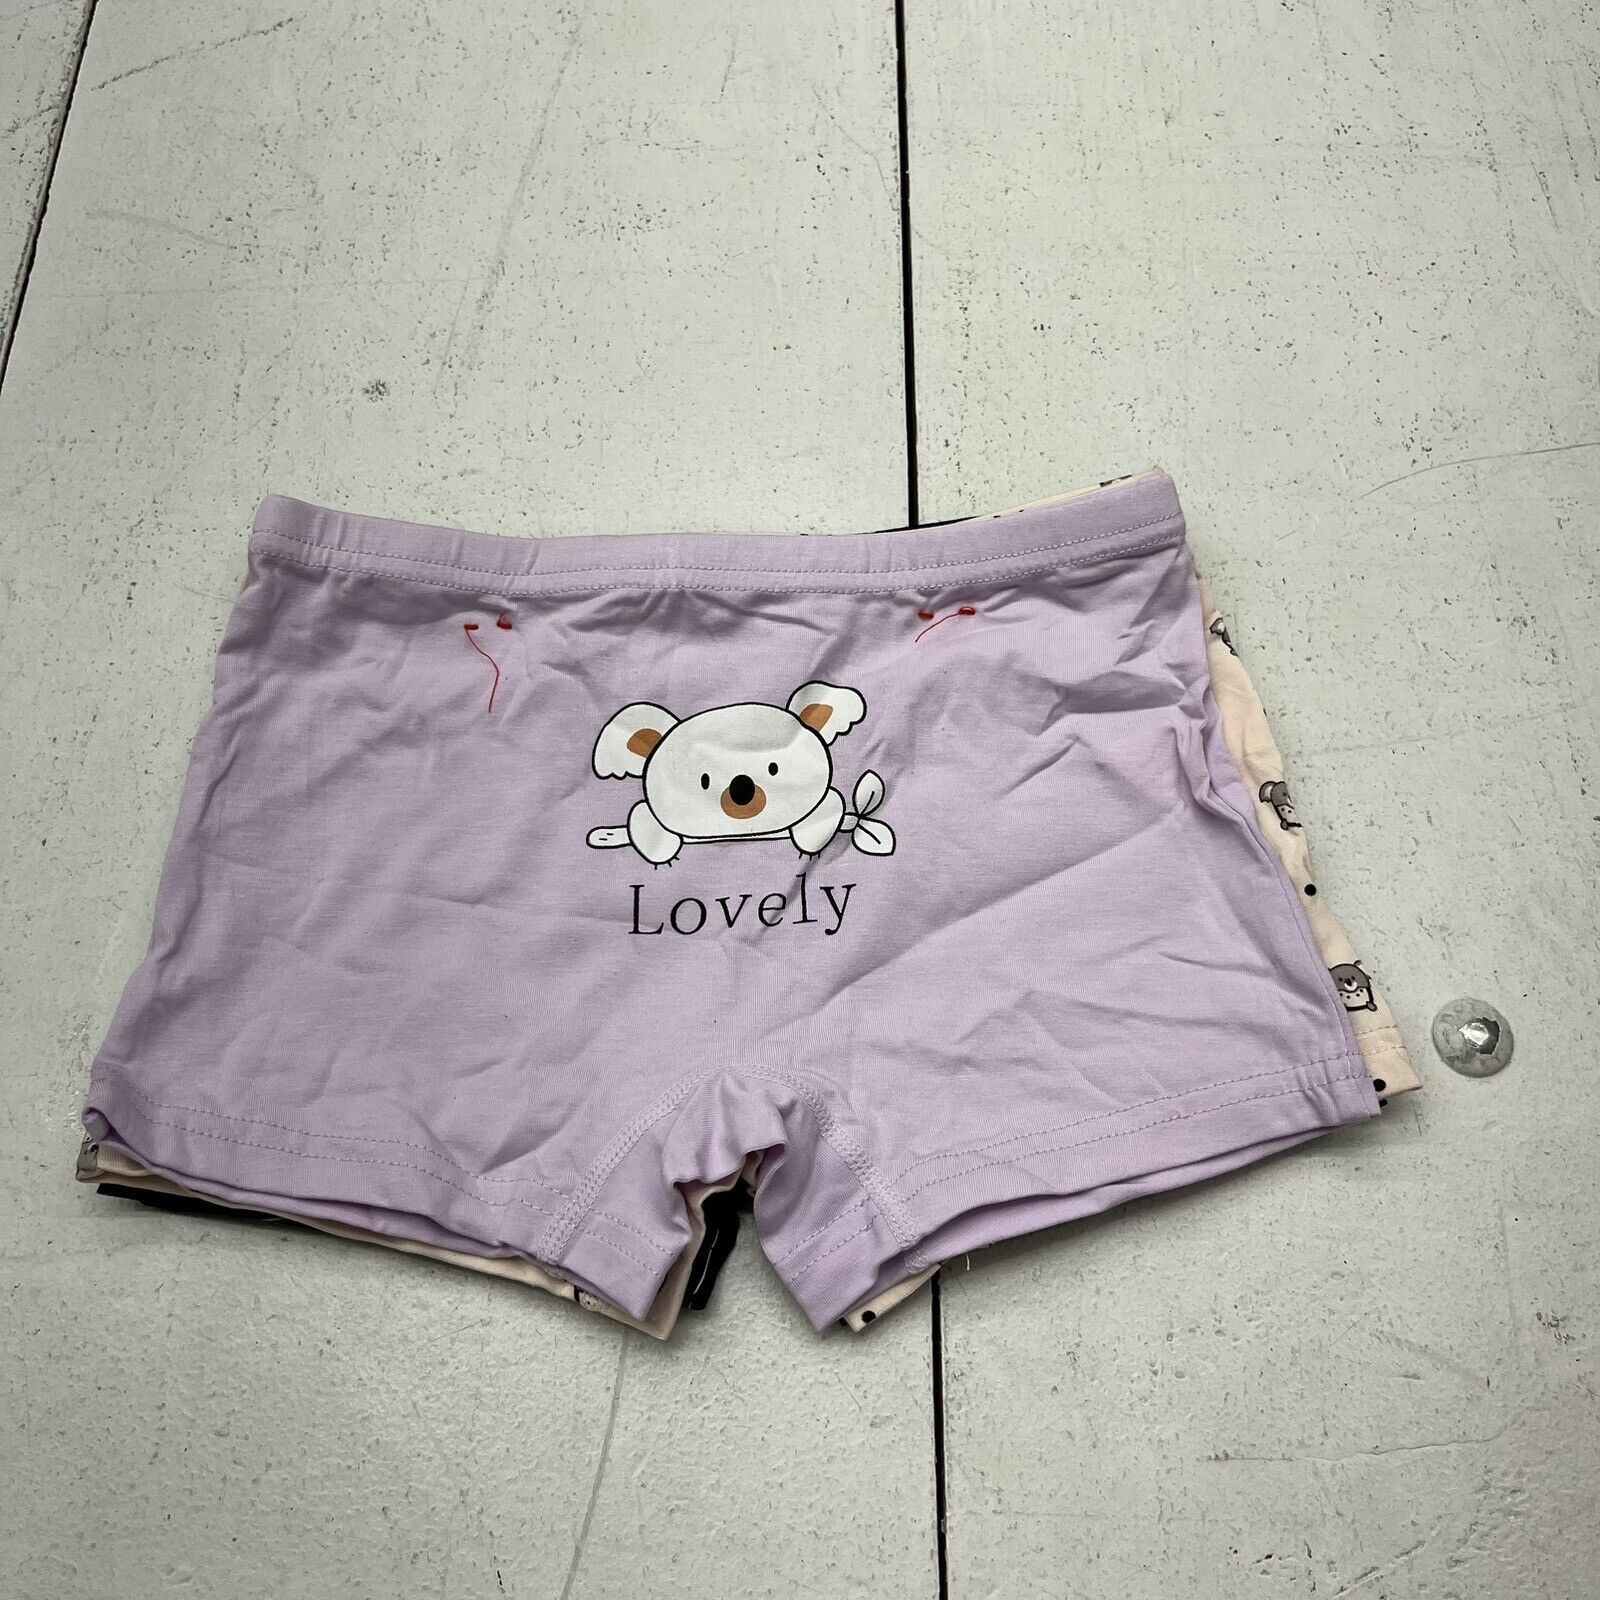 Joanna Multicolored Grpahic Printed 3 Pack Boy Short Underwear